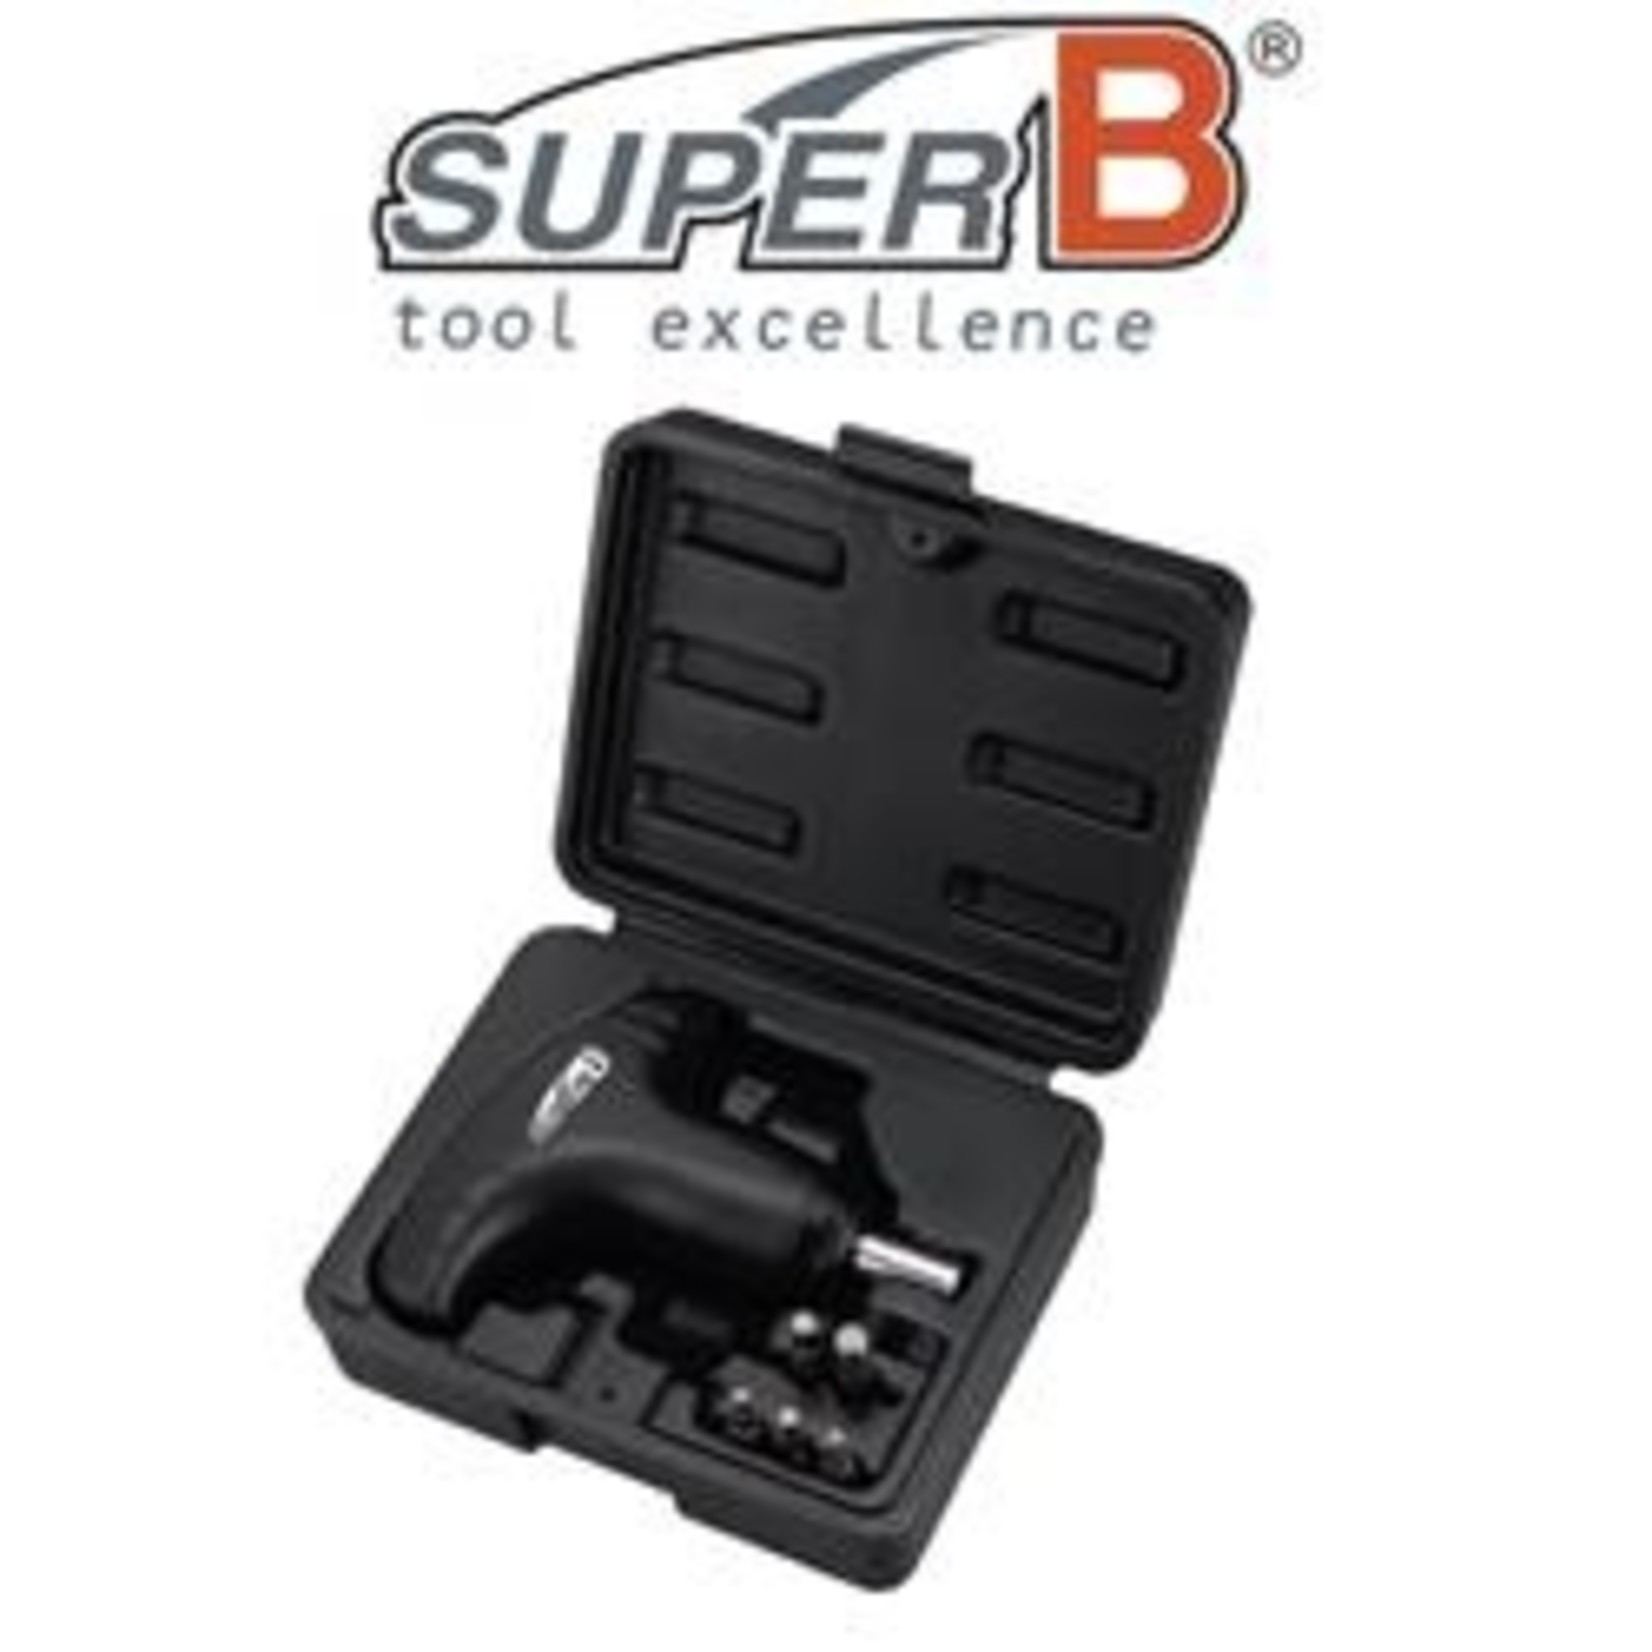 Super B SuperB Preset Torque Wrench - 10 Nm - Bike Tool - TBTW10